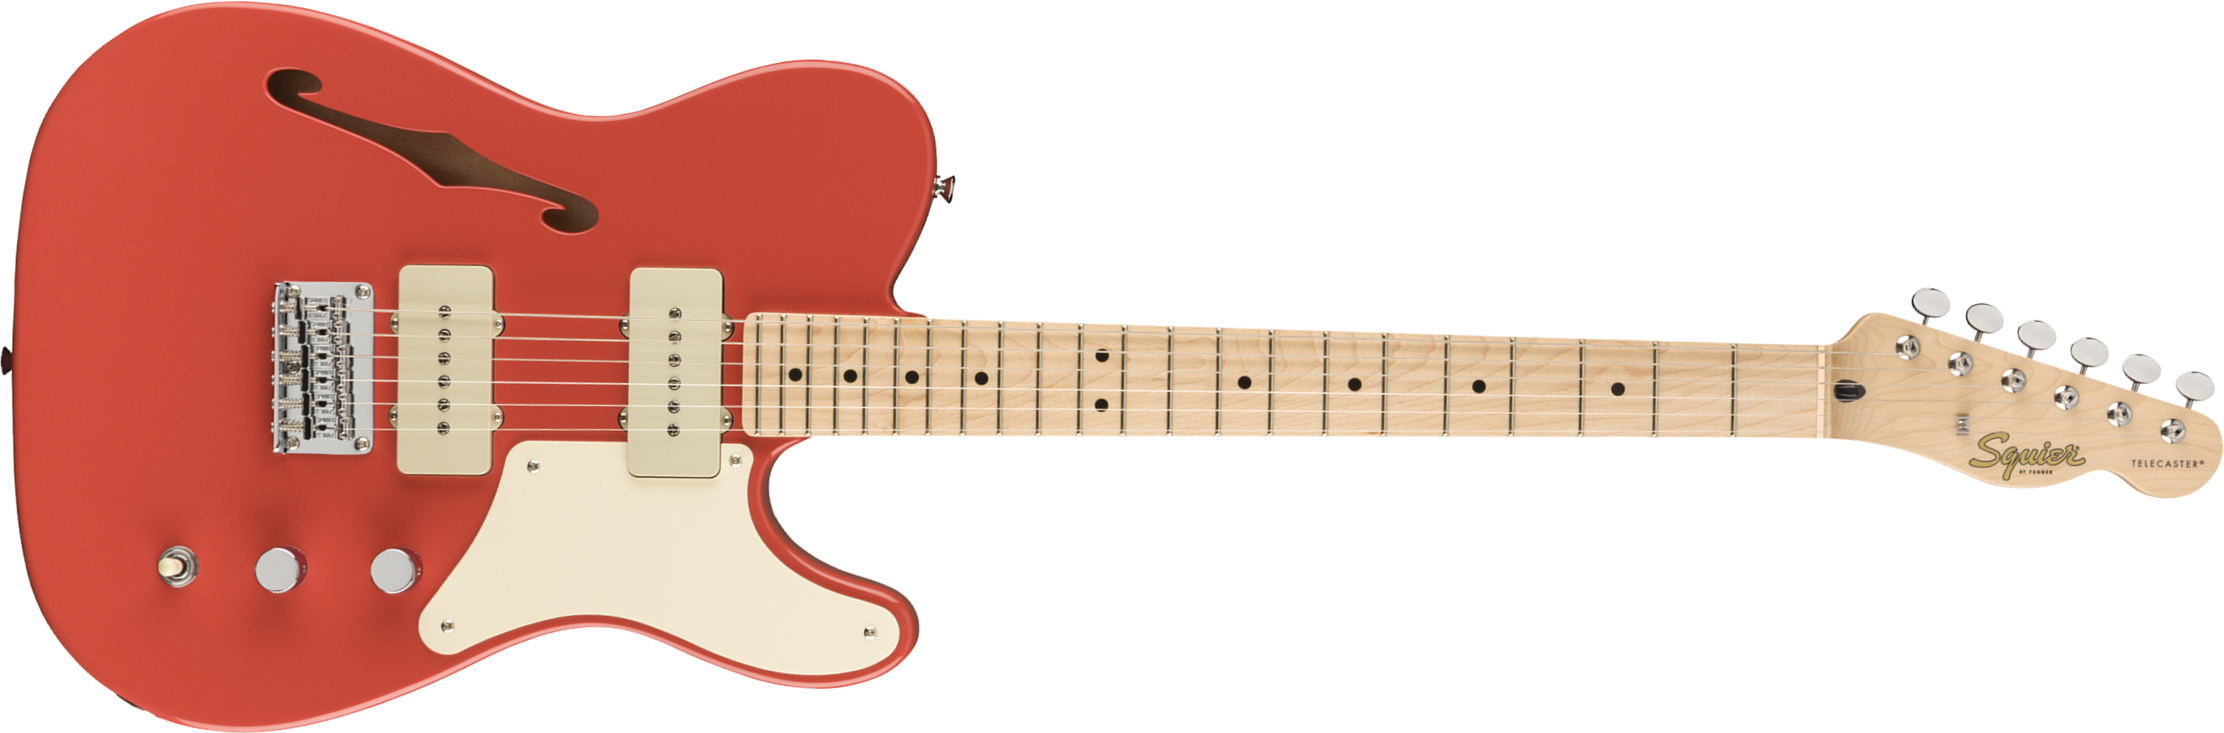 Squier Tele Thinline Cabronita Paranormal Ss Ht Mn - Fiesta Red - Semi hollow elektriche gitaar - Main picture